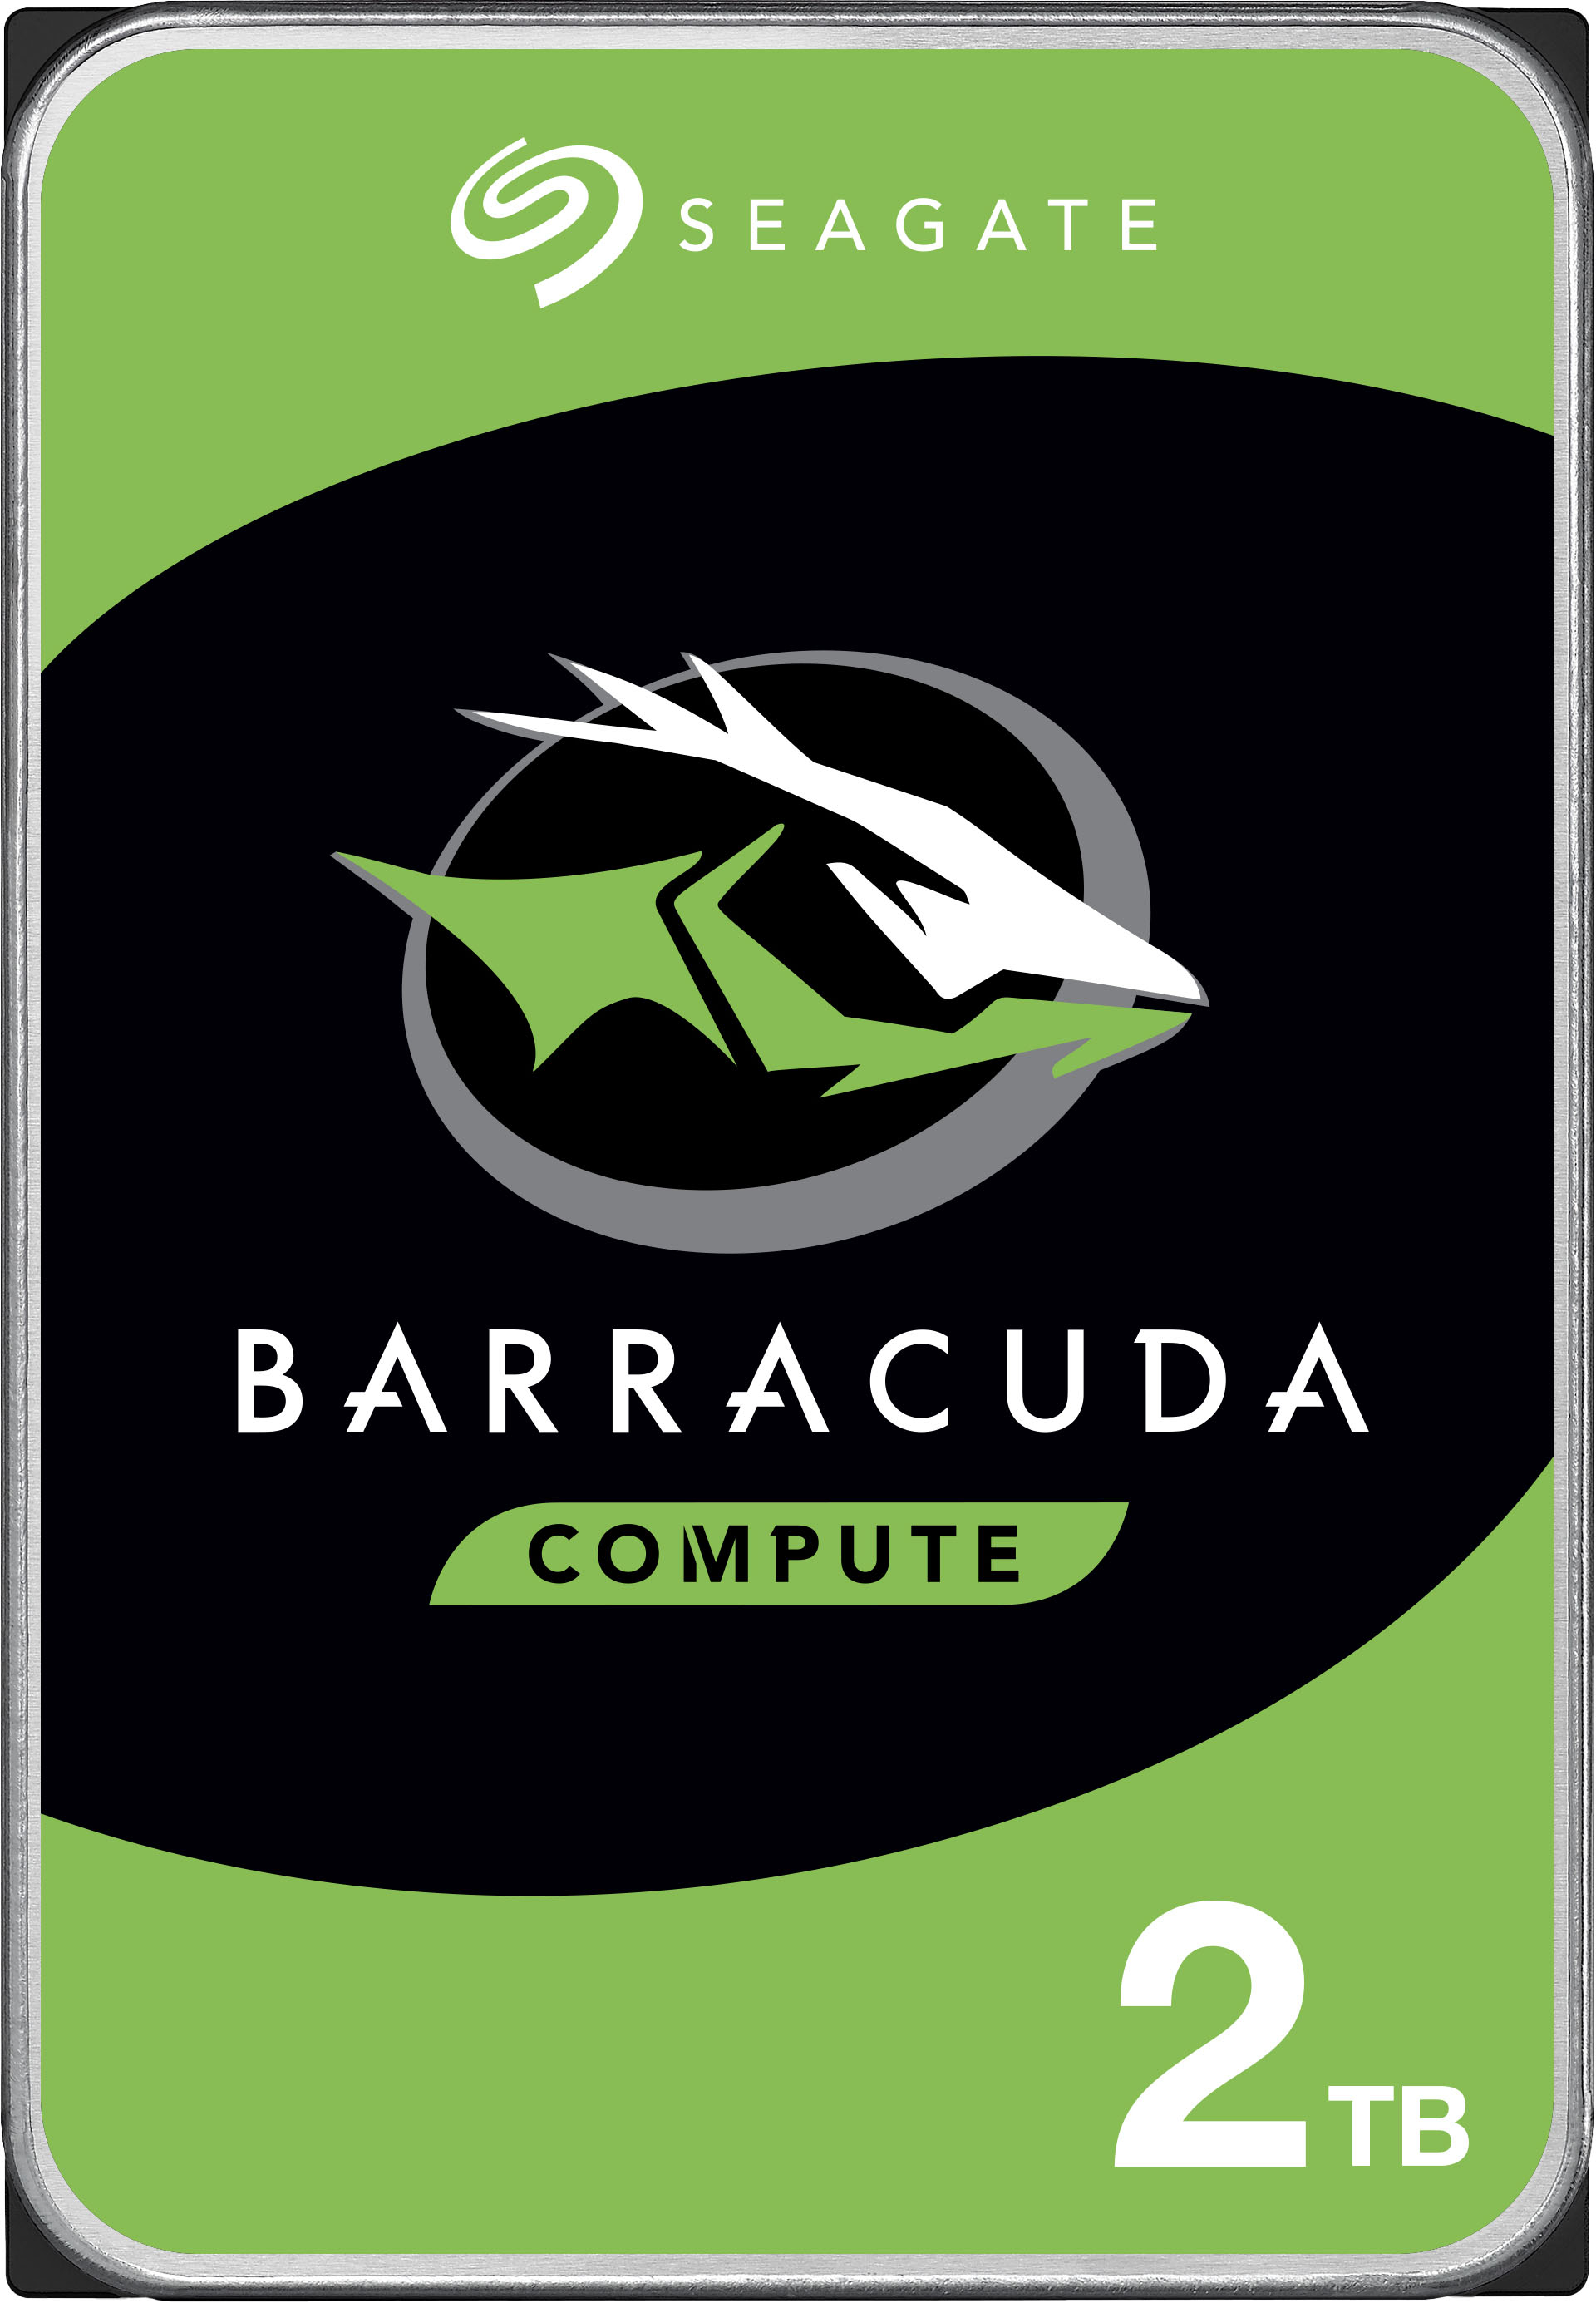 Seagate Barracuda 2TB Internal SATA Hard Drive for Desktops